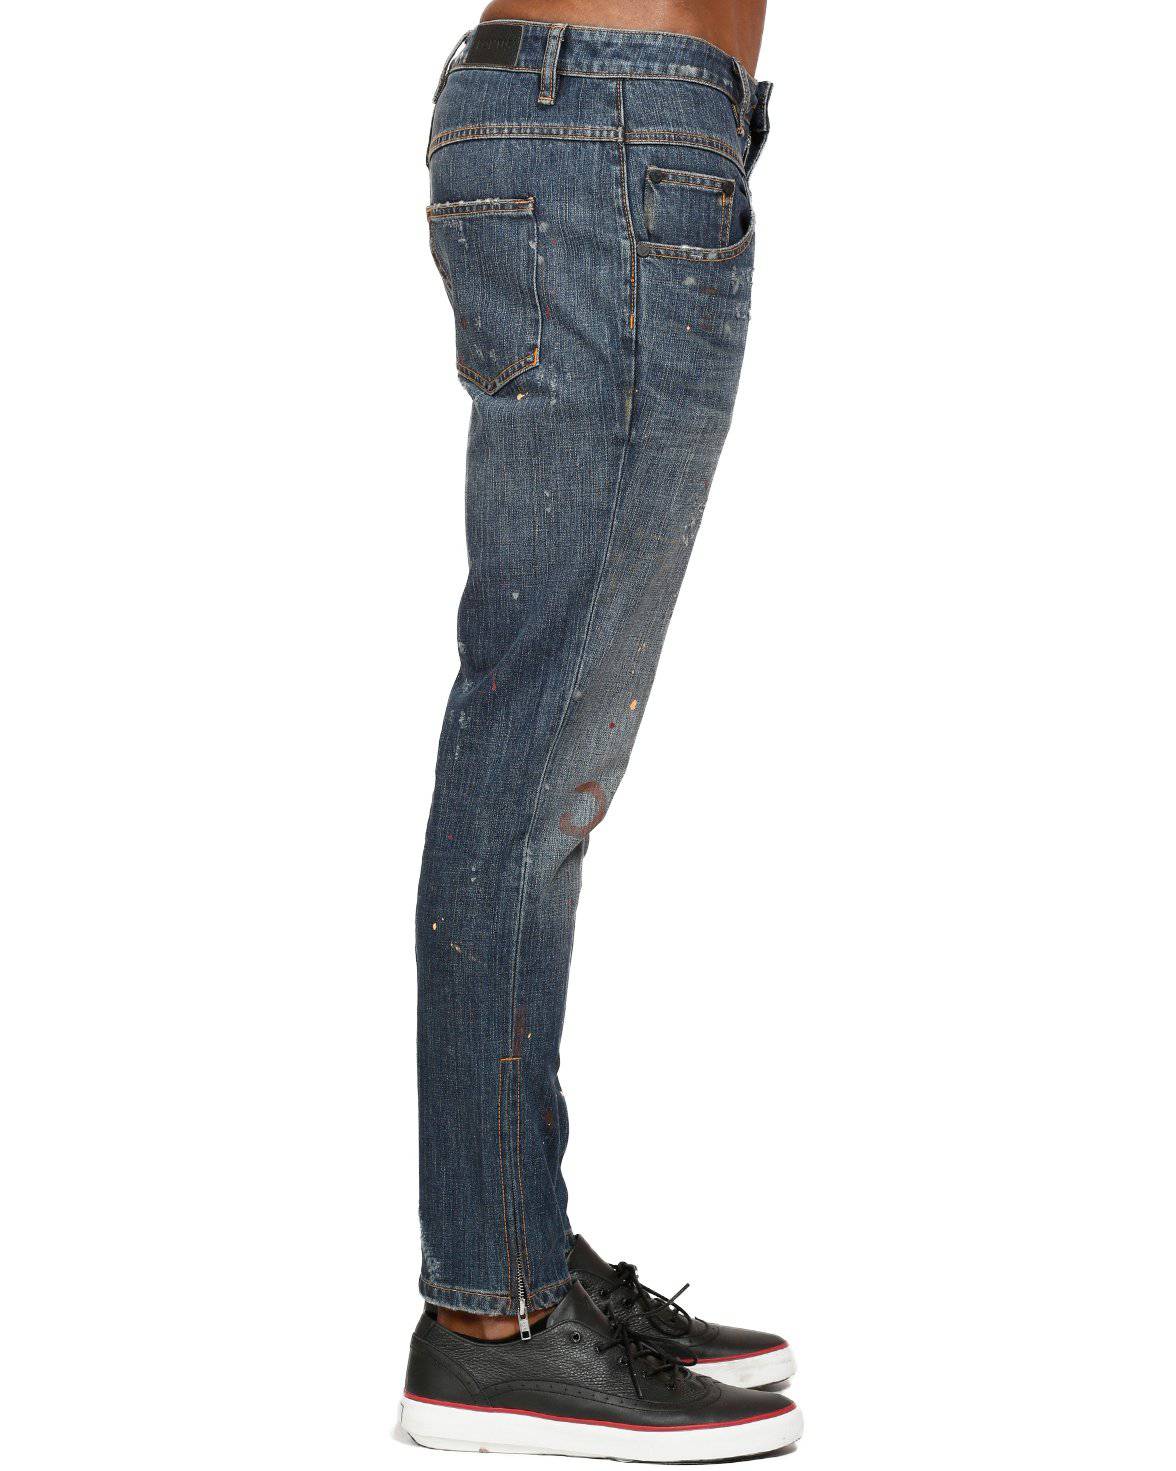 Konus Men's Side Zip Paint Splatter Jeans by Shop at Konus